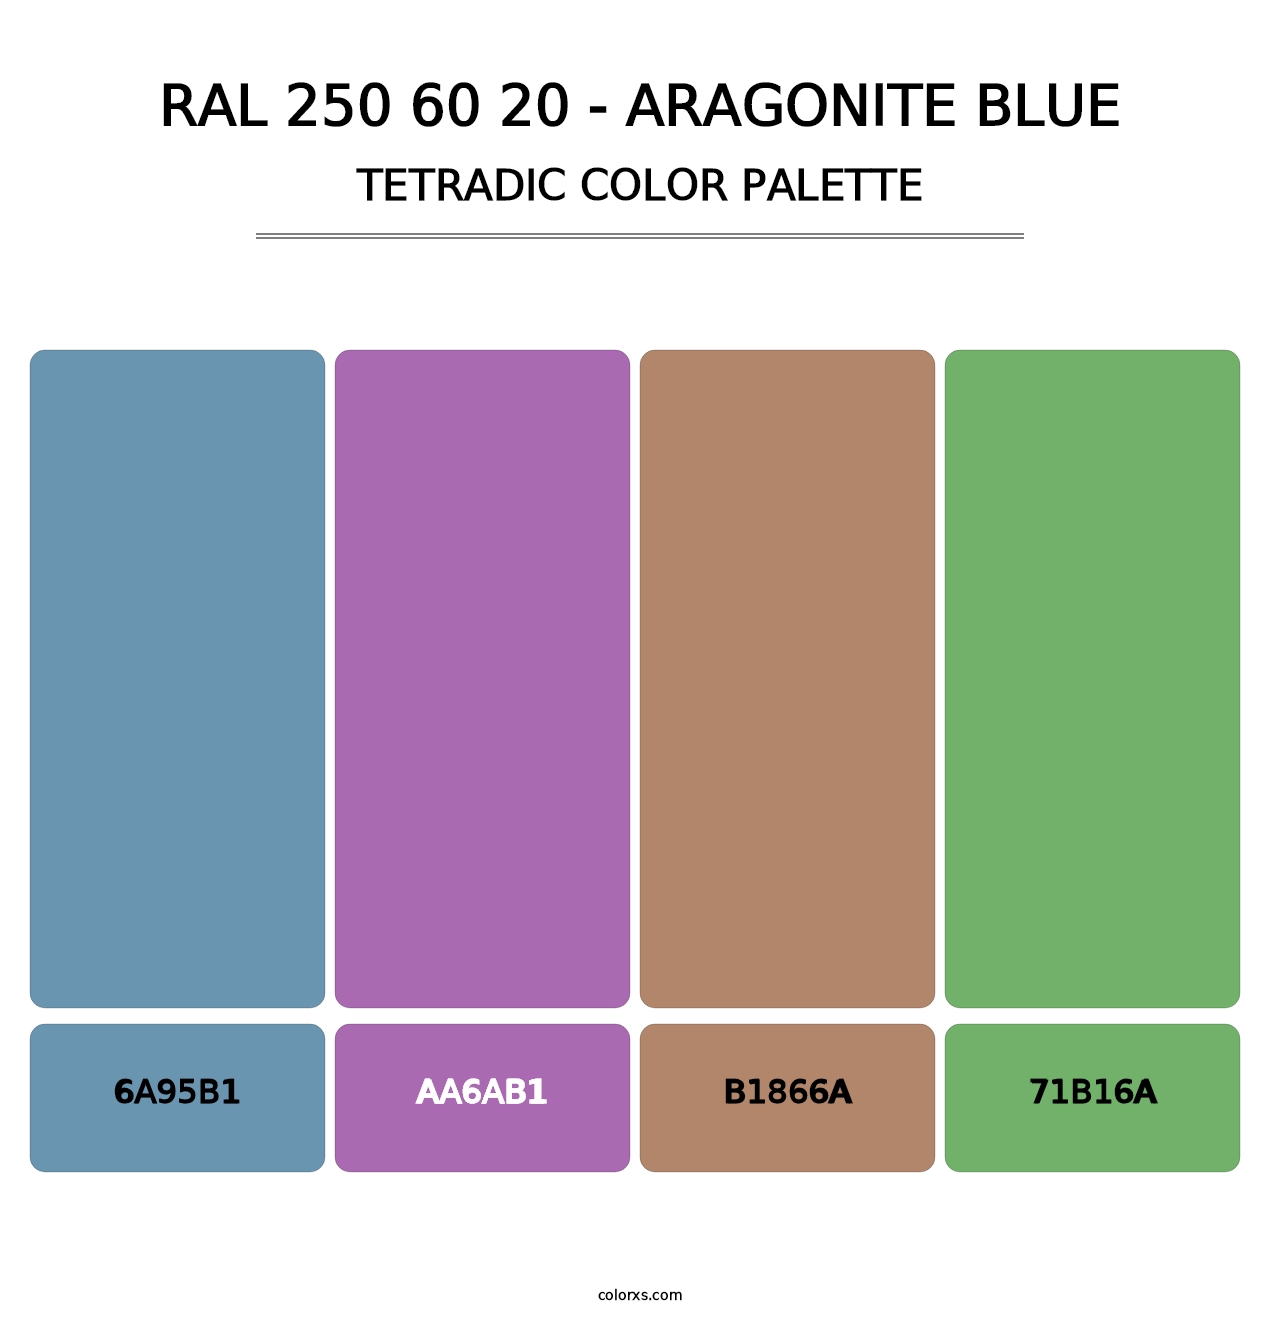 RAL 250 60 20 - Aragonite Blue - Tetradic Color Palette